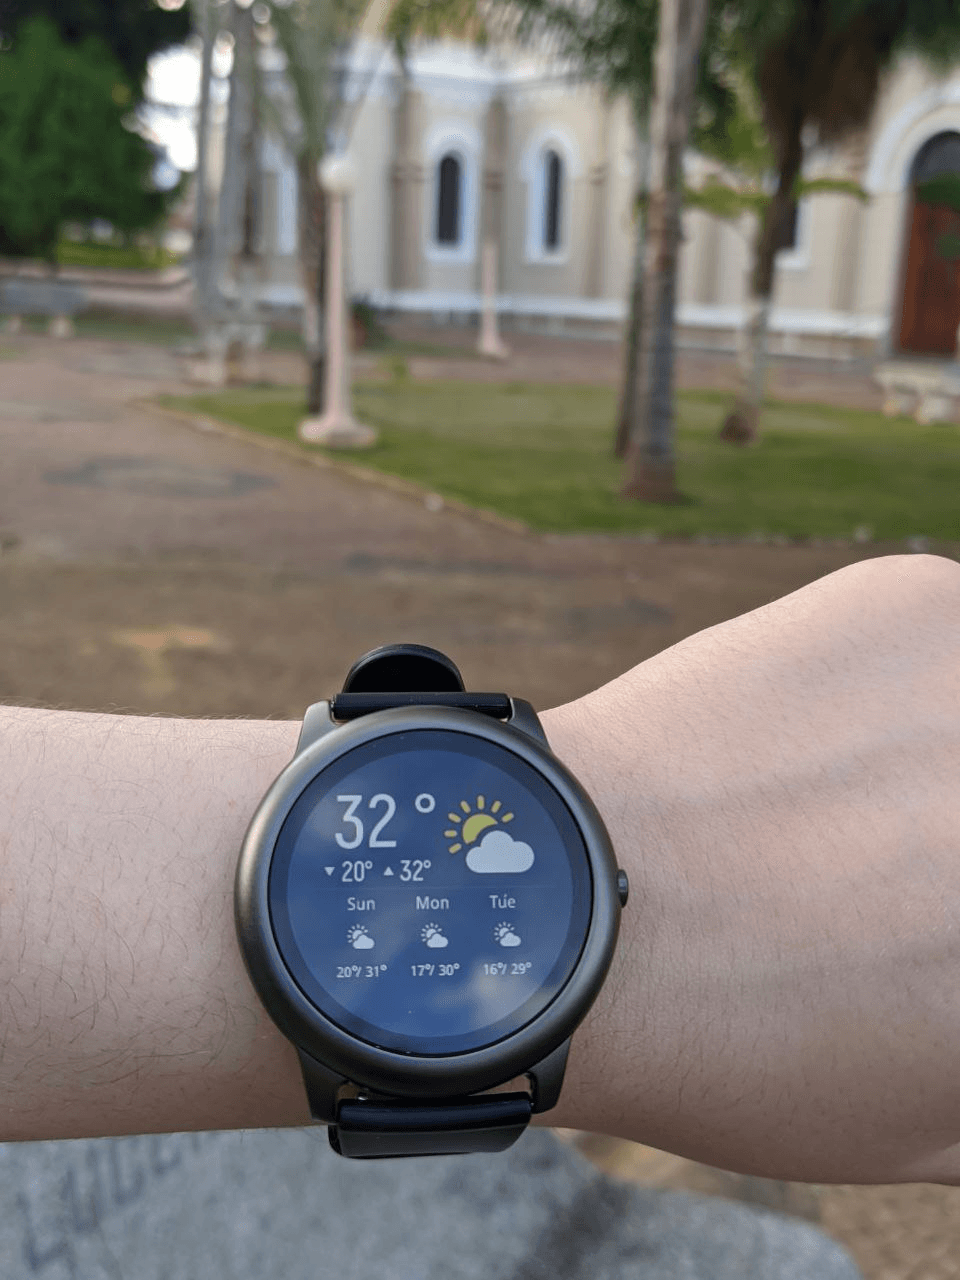 Haylou Solar Smartwatch - Entrega mundial